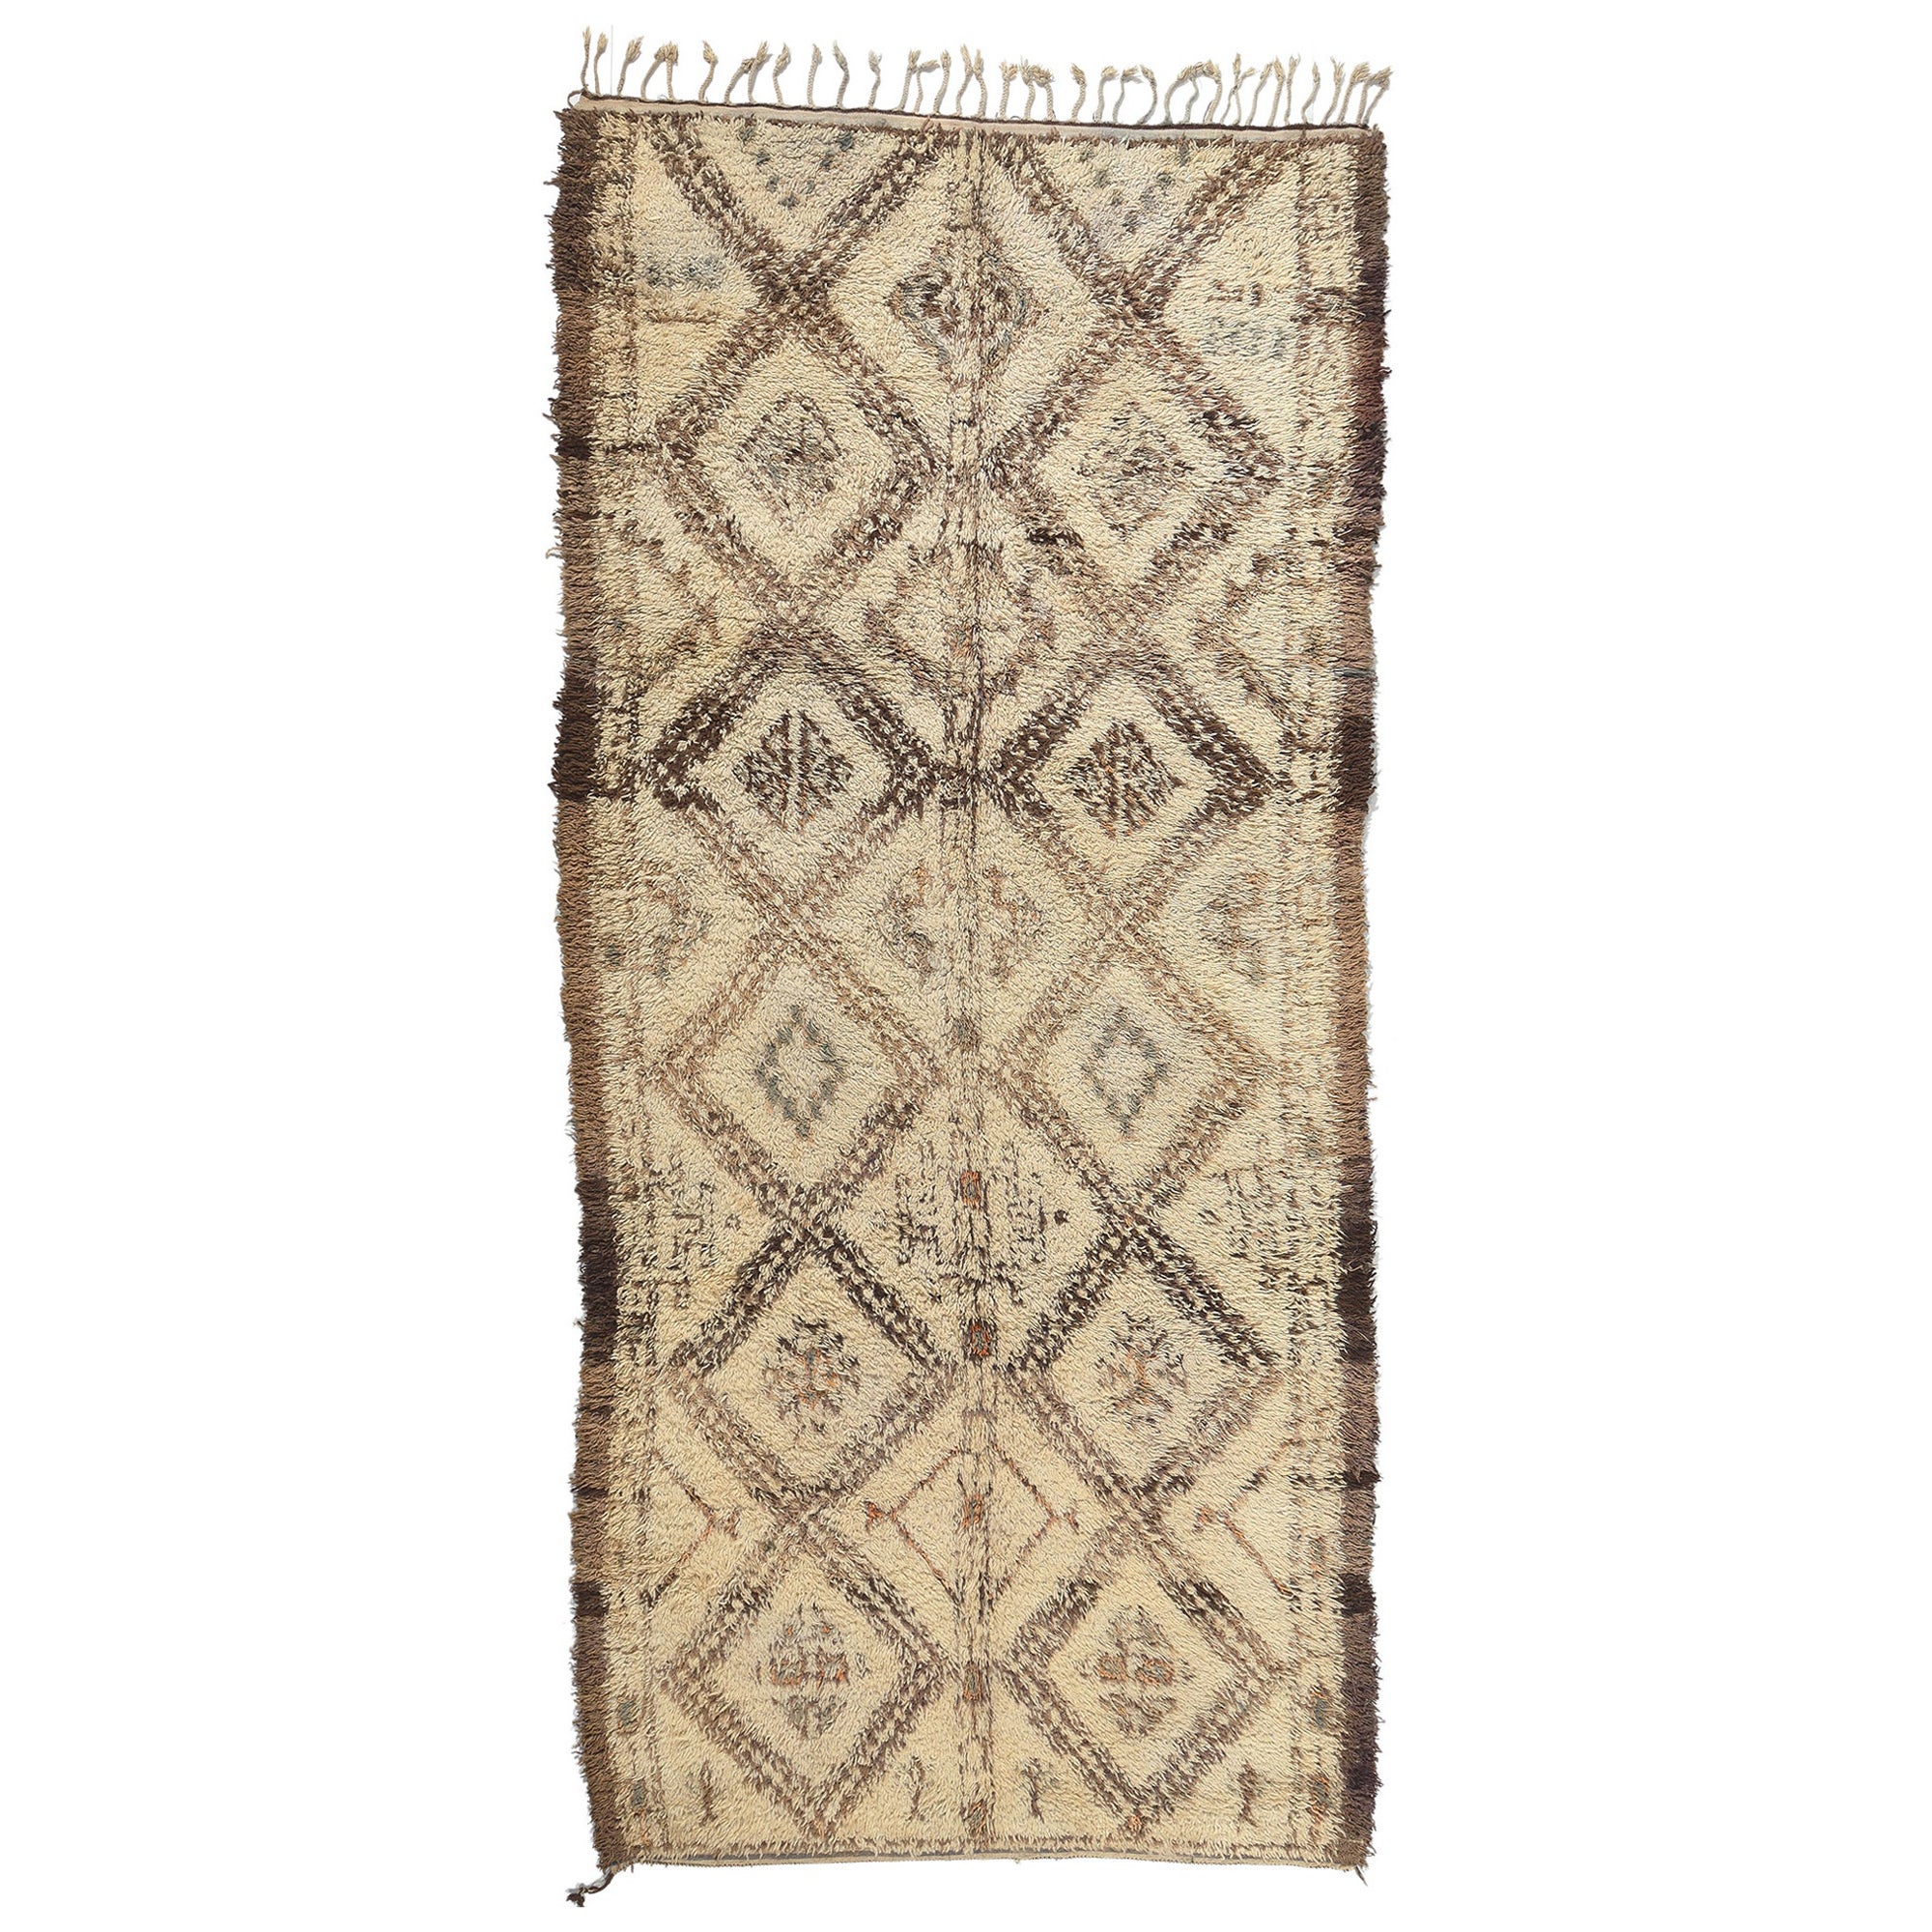 Vintage Beni MGuild Moroccan Rug, Cohesive Coziness Meets Subtle Shibui